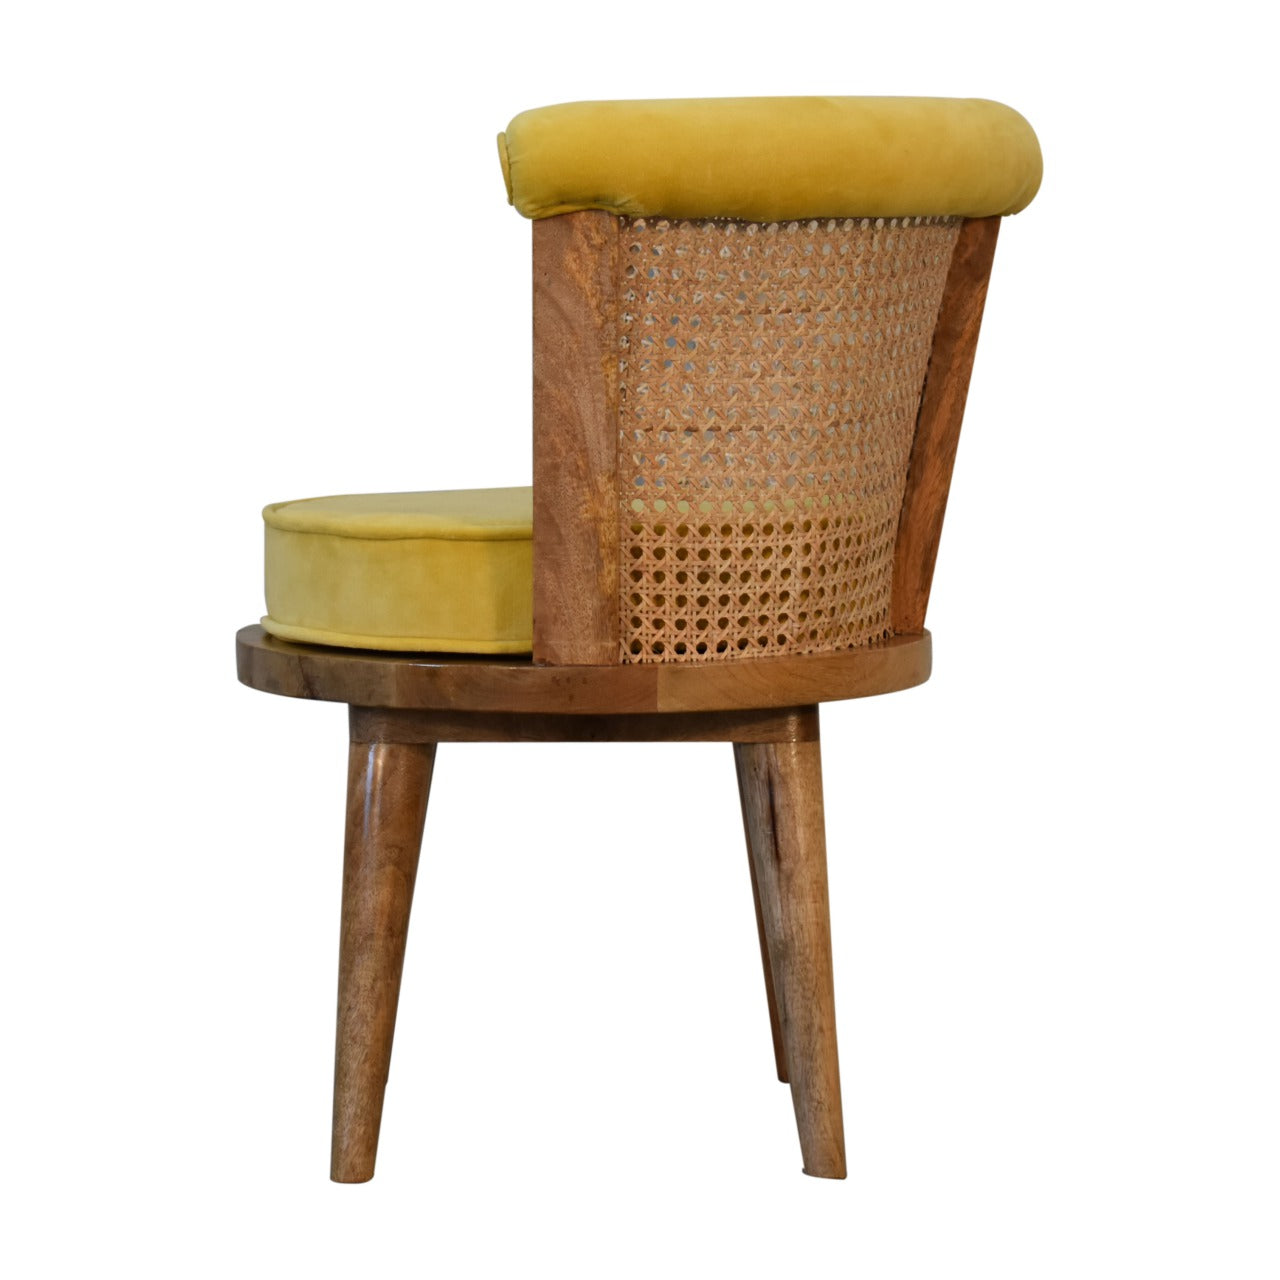 in1847 mustard cotton velvet nordic rattan chair